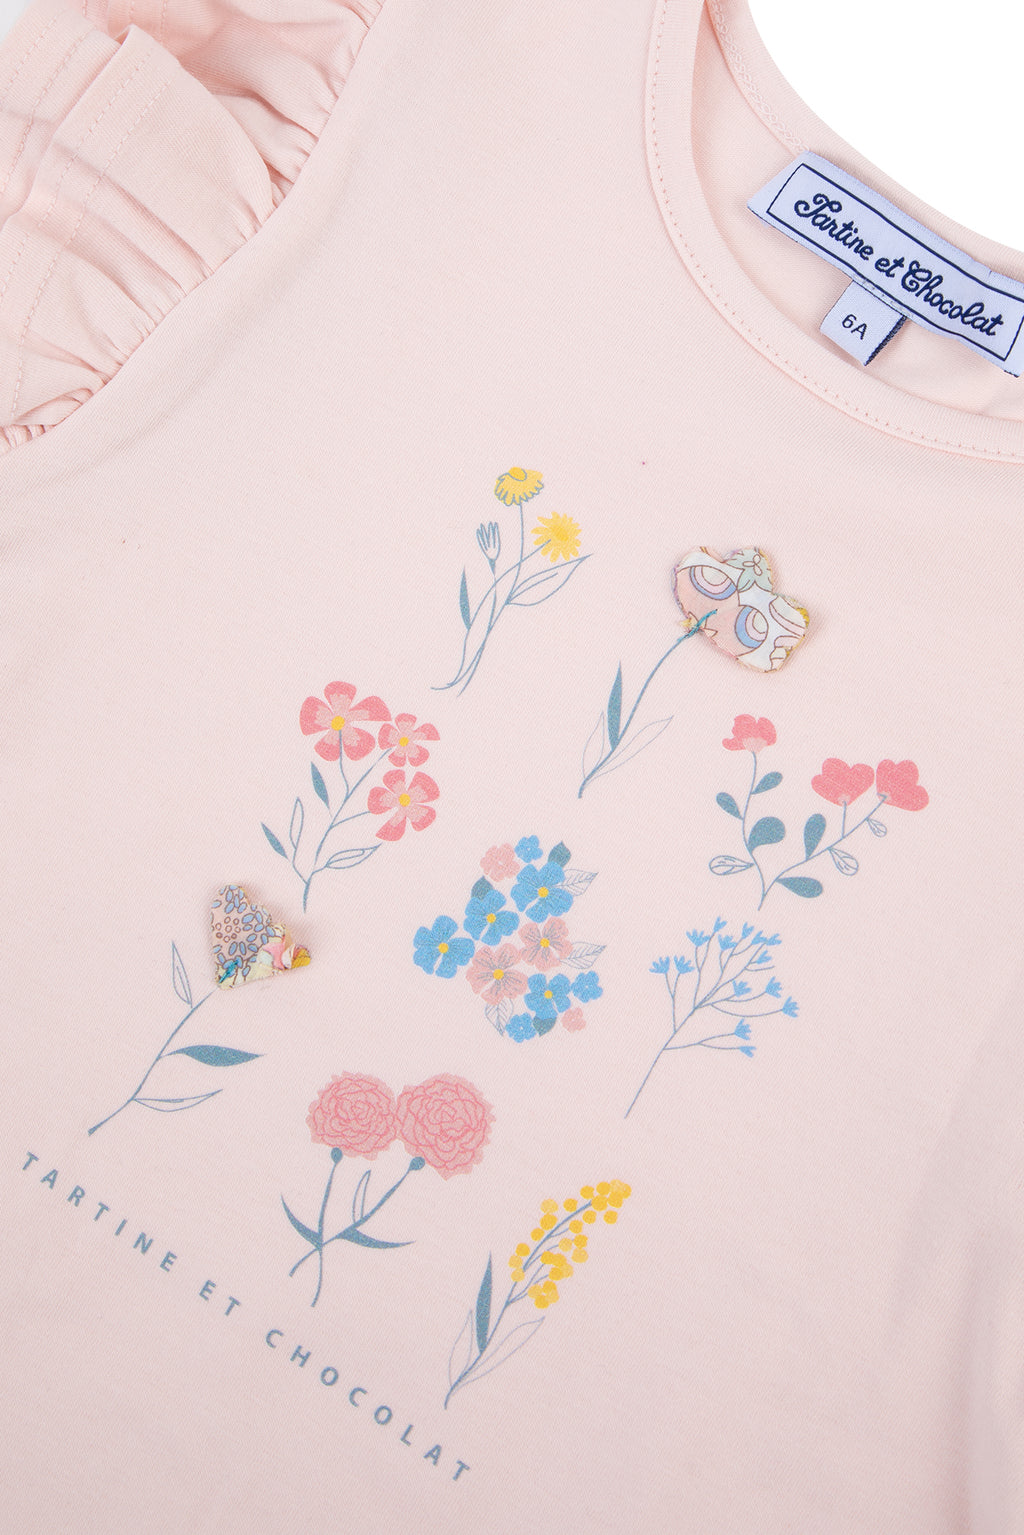 T-shirt - Rose pâle illustration fleurs